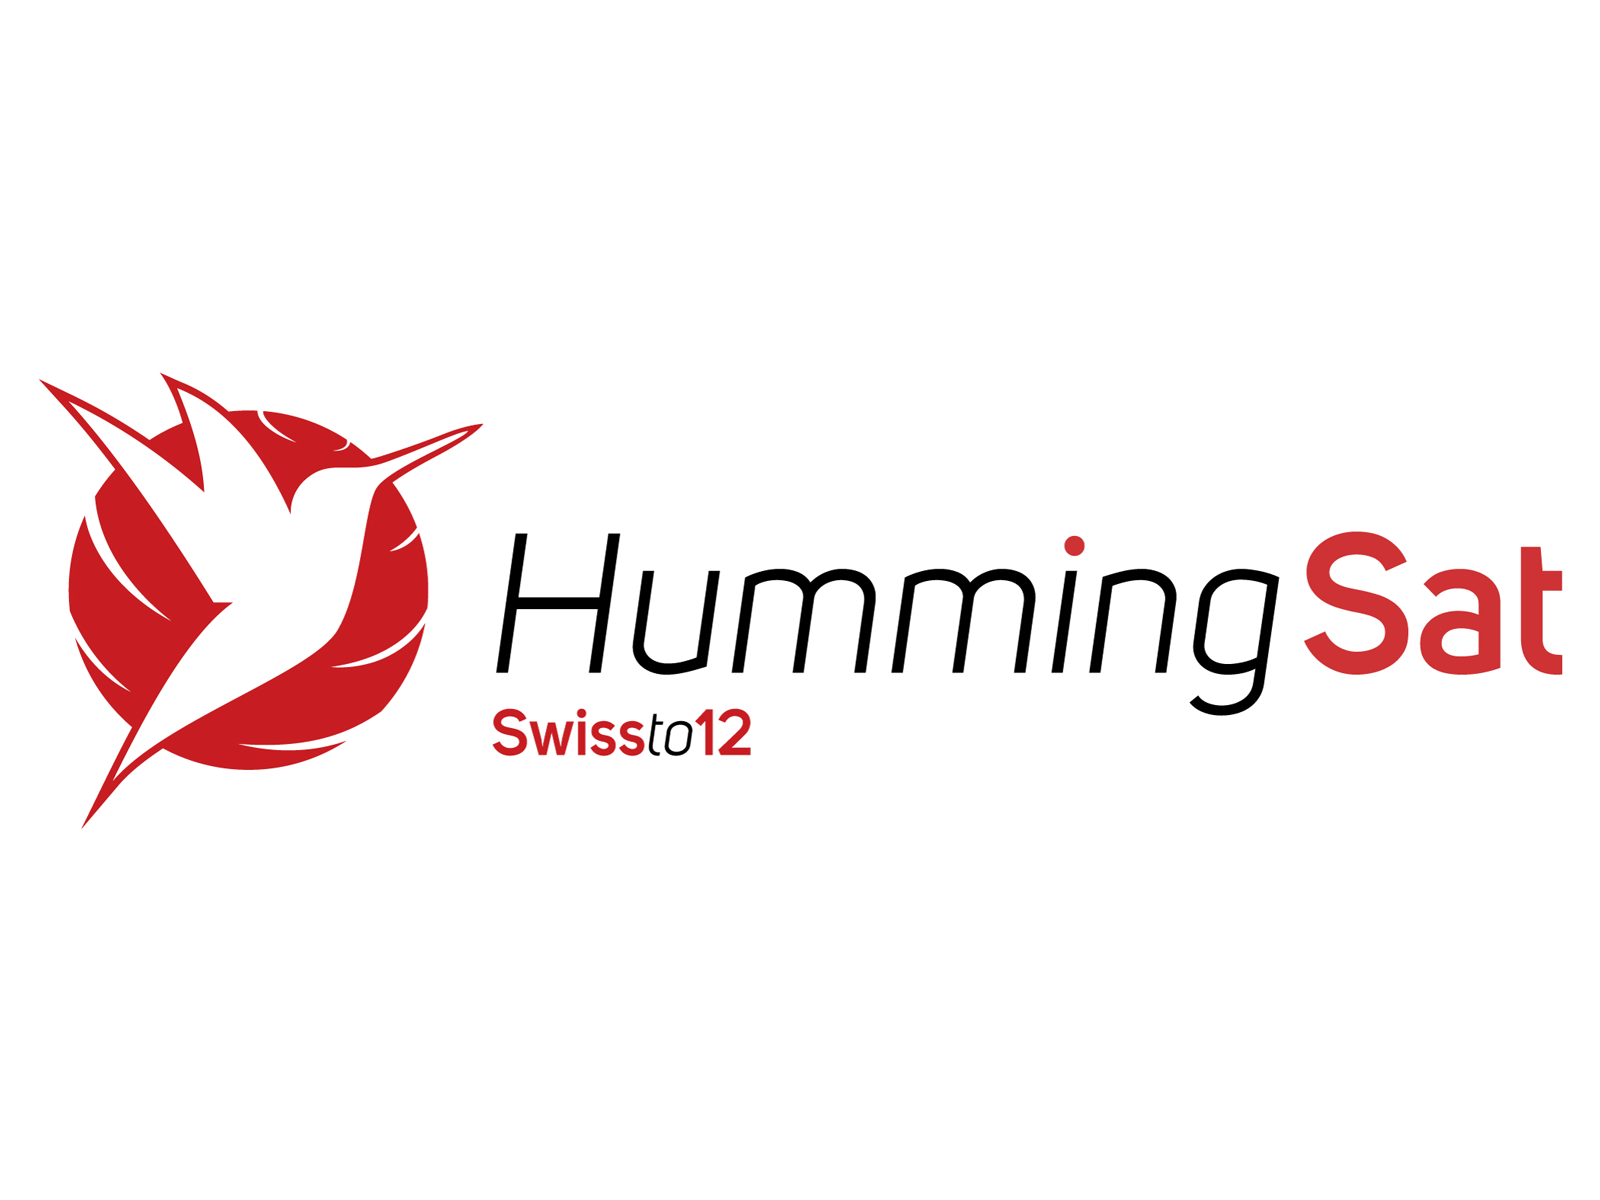 HummingSat: SWISSto12 brands its satellite product line